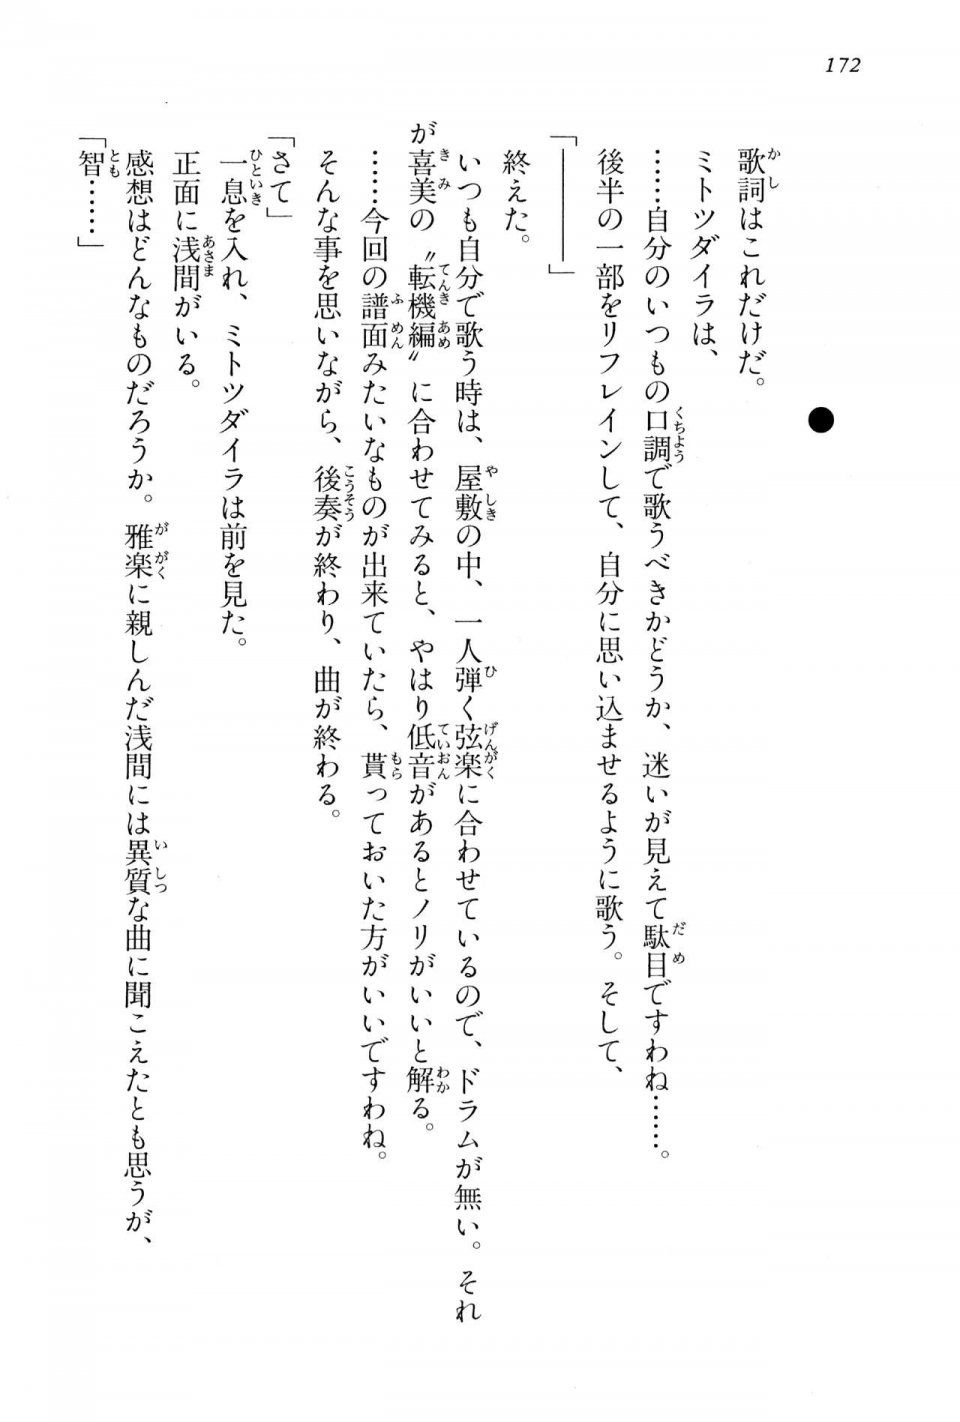 Kyoukai Senjou no Horizon BD Special Mininovel Vol 2(1B) - Photo #176